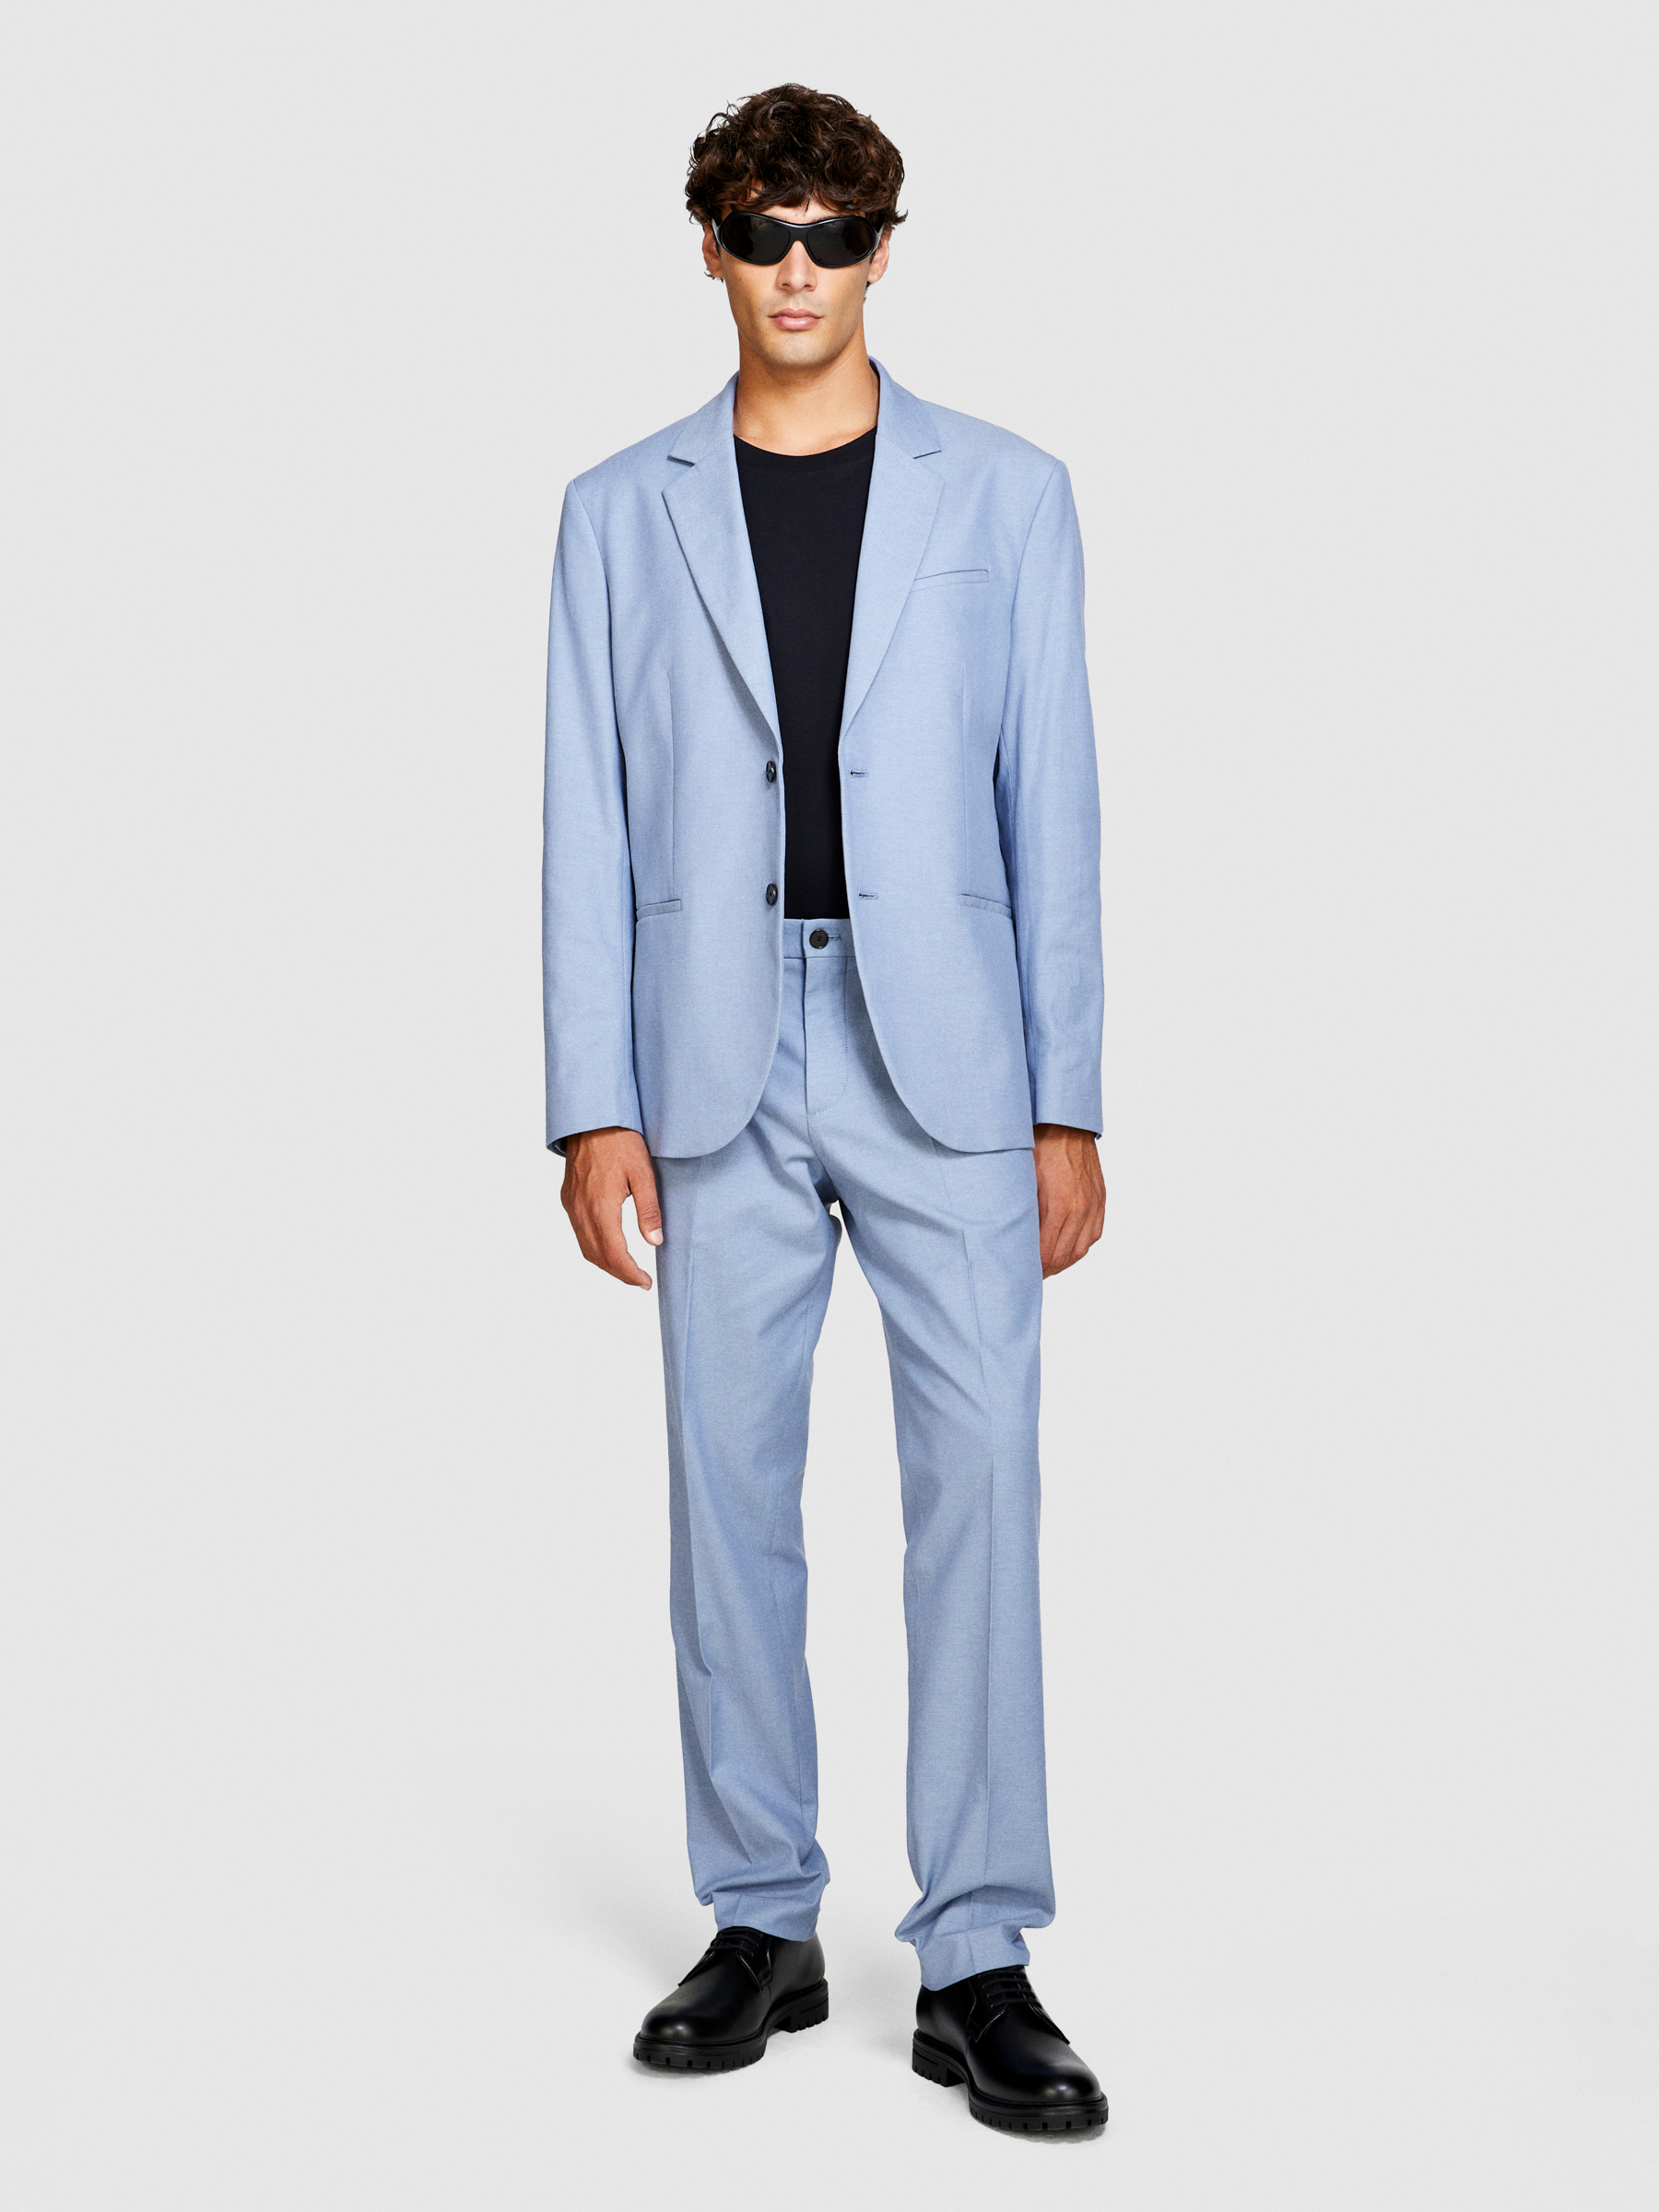 Sisley - Yarn Dyed Blazer, Man, Light Blue, Size: 48